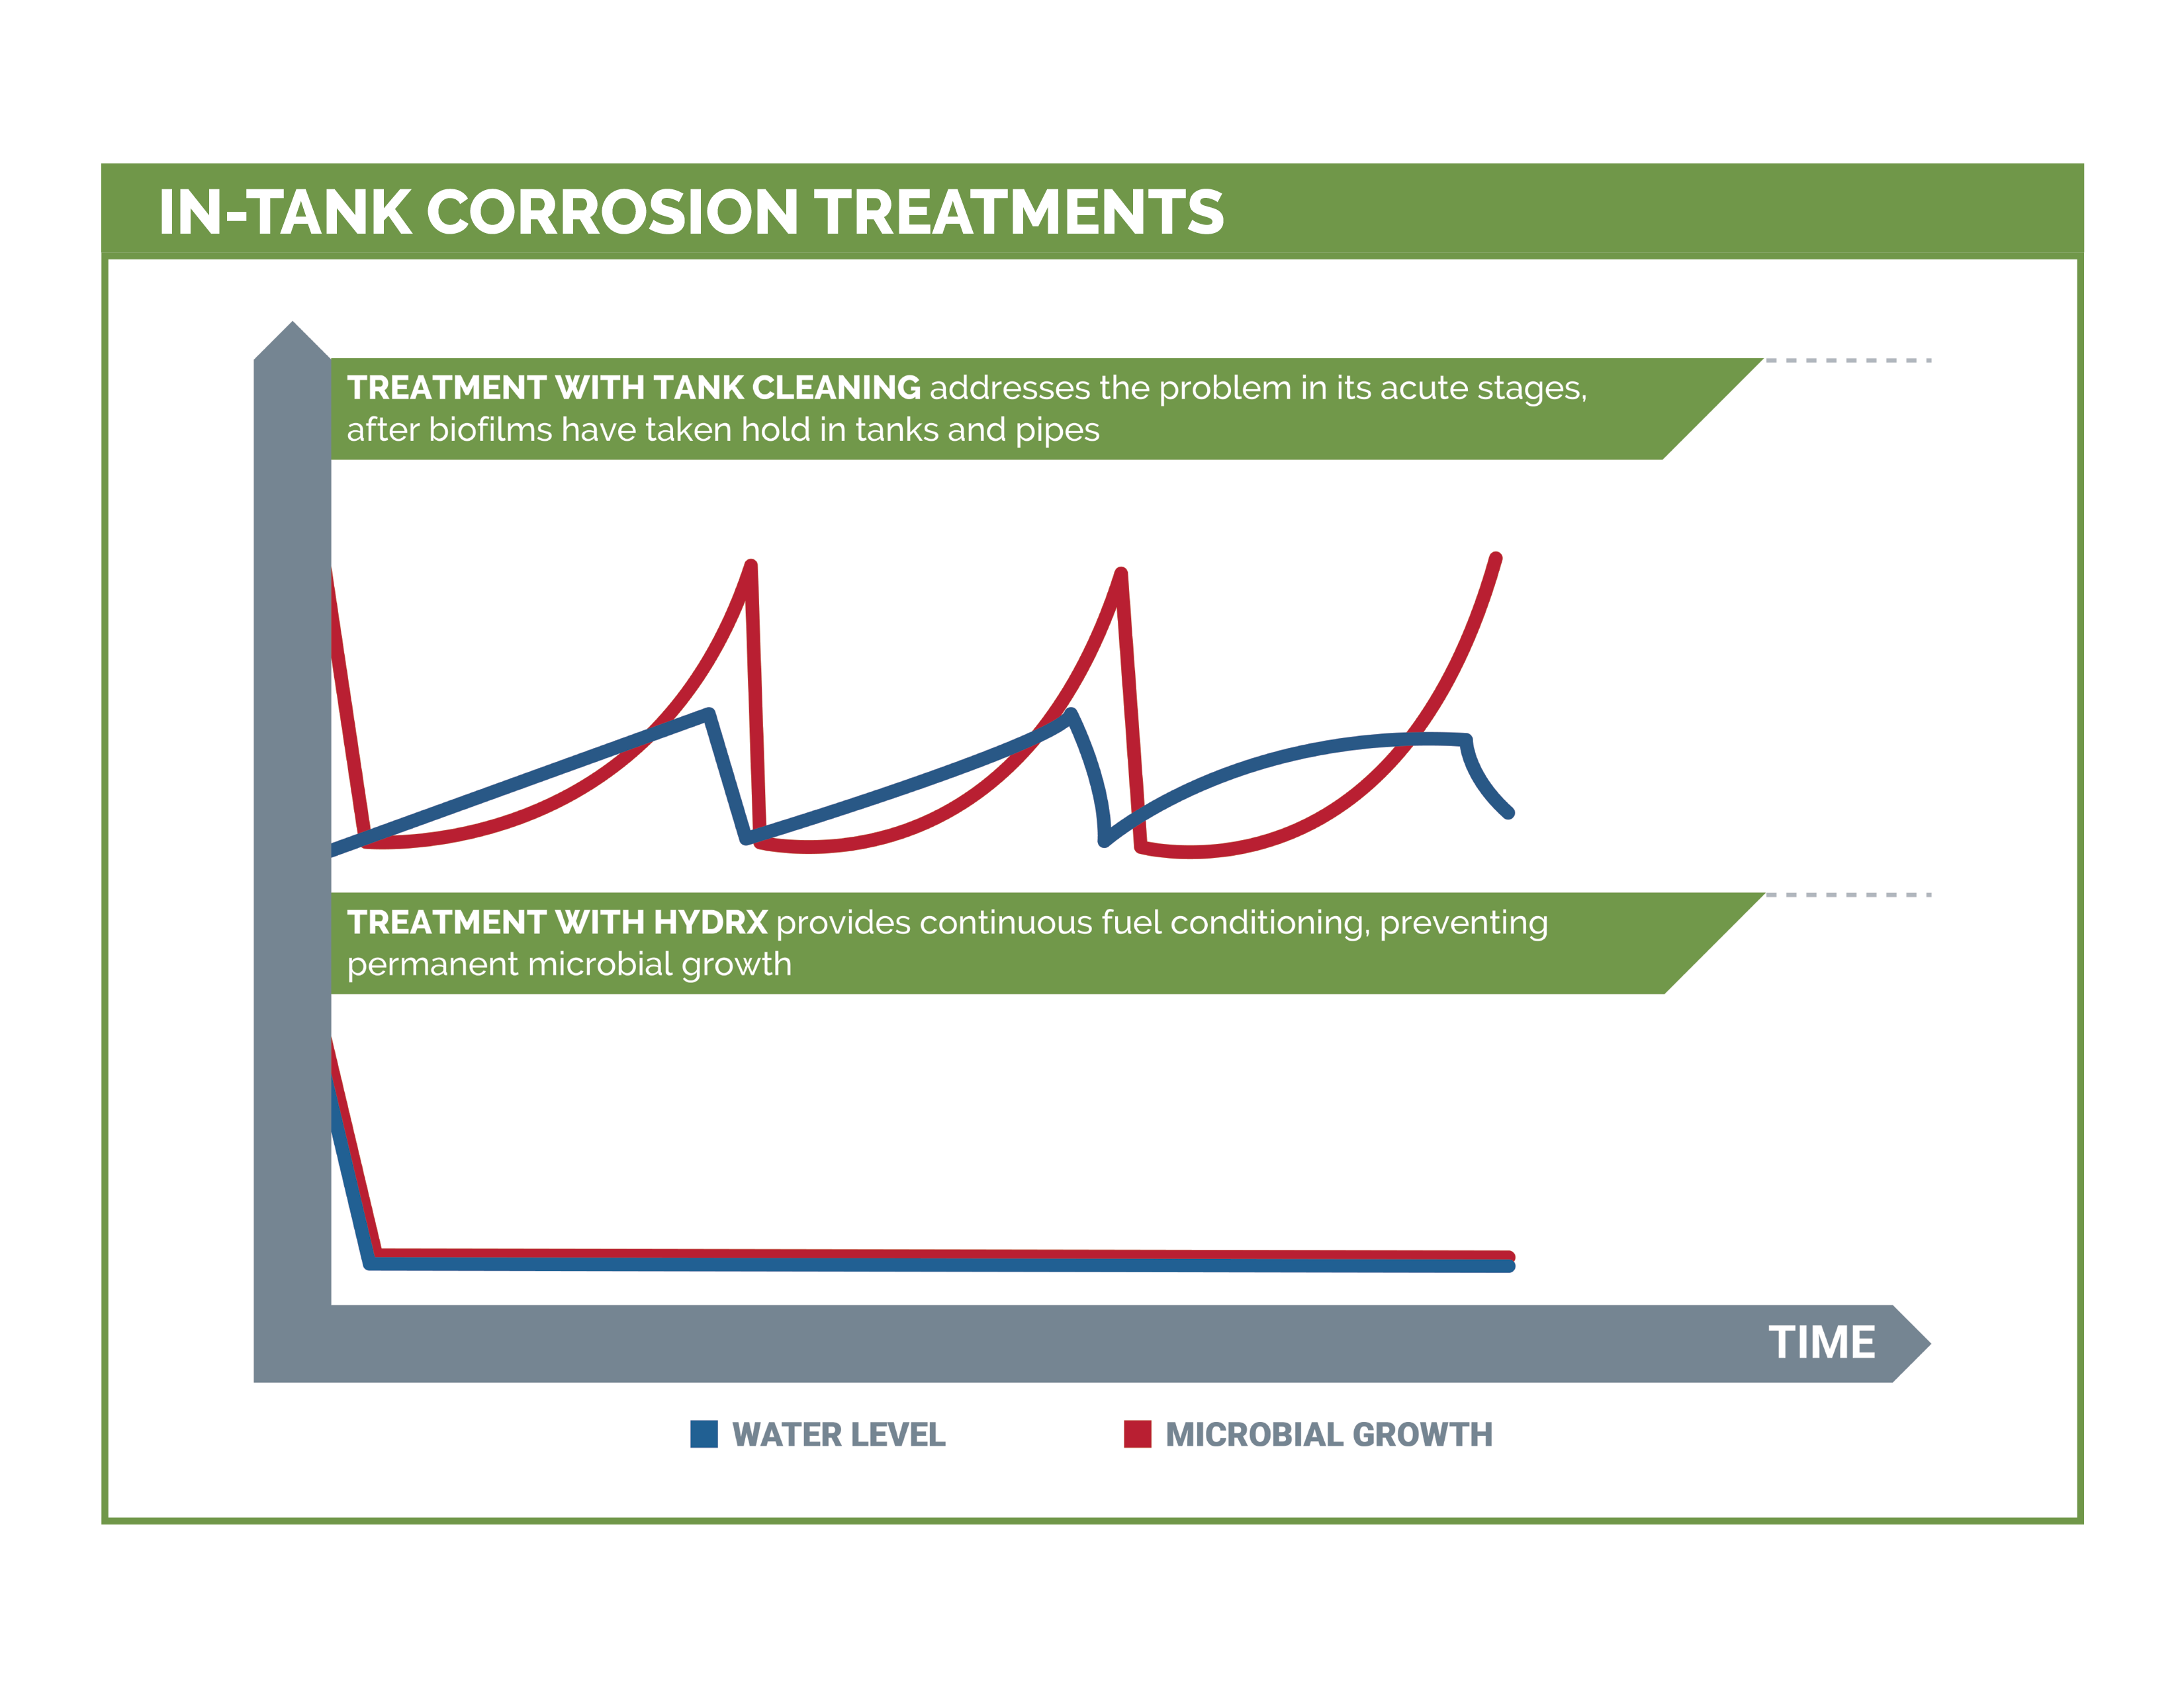 In Tank Corrosion Treatment